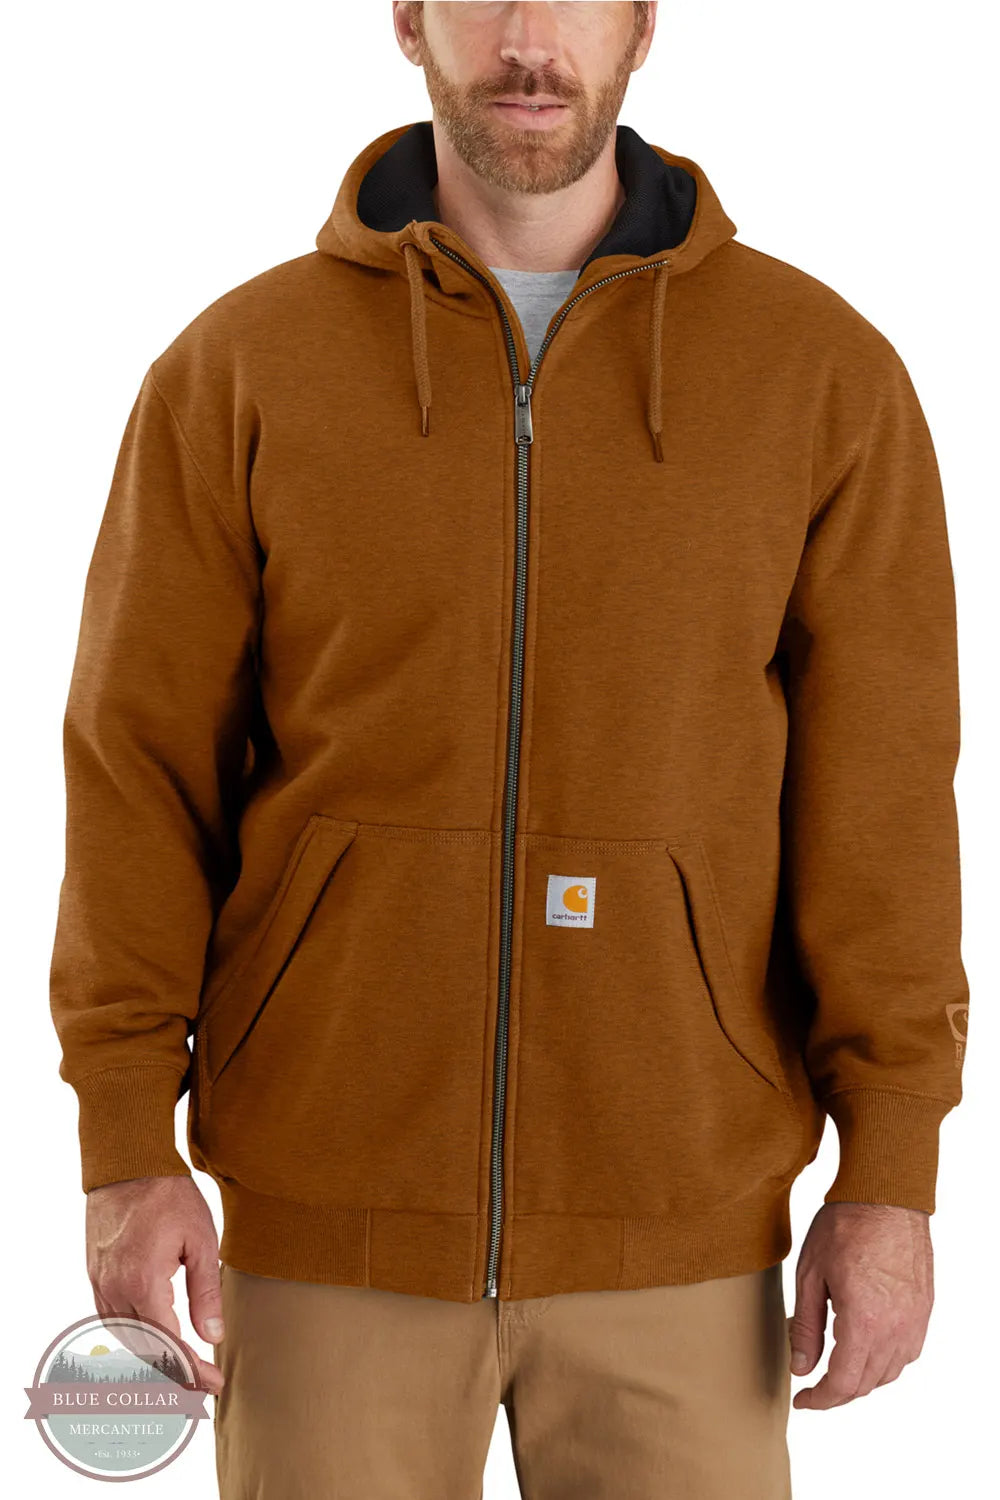 Rain Defender Midweight Thermal-Lined Full-Zip Sweatshirt by Carhartt 104078